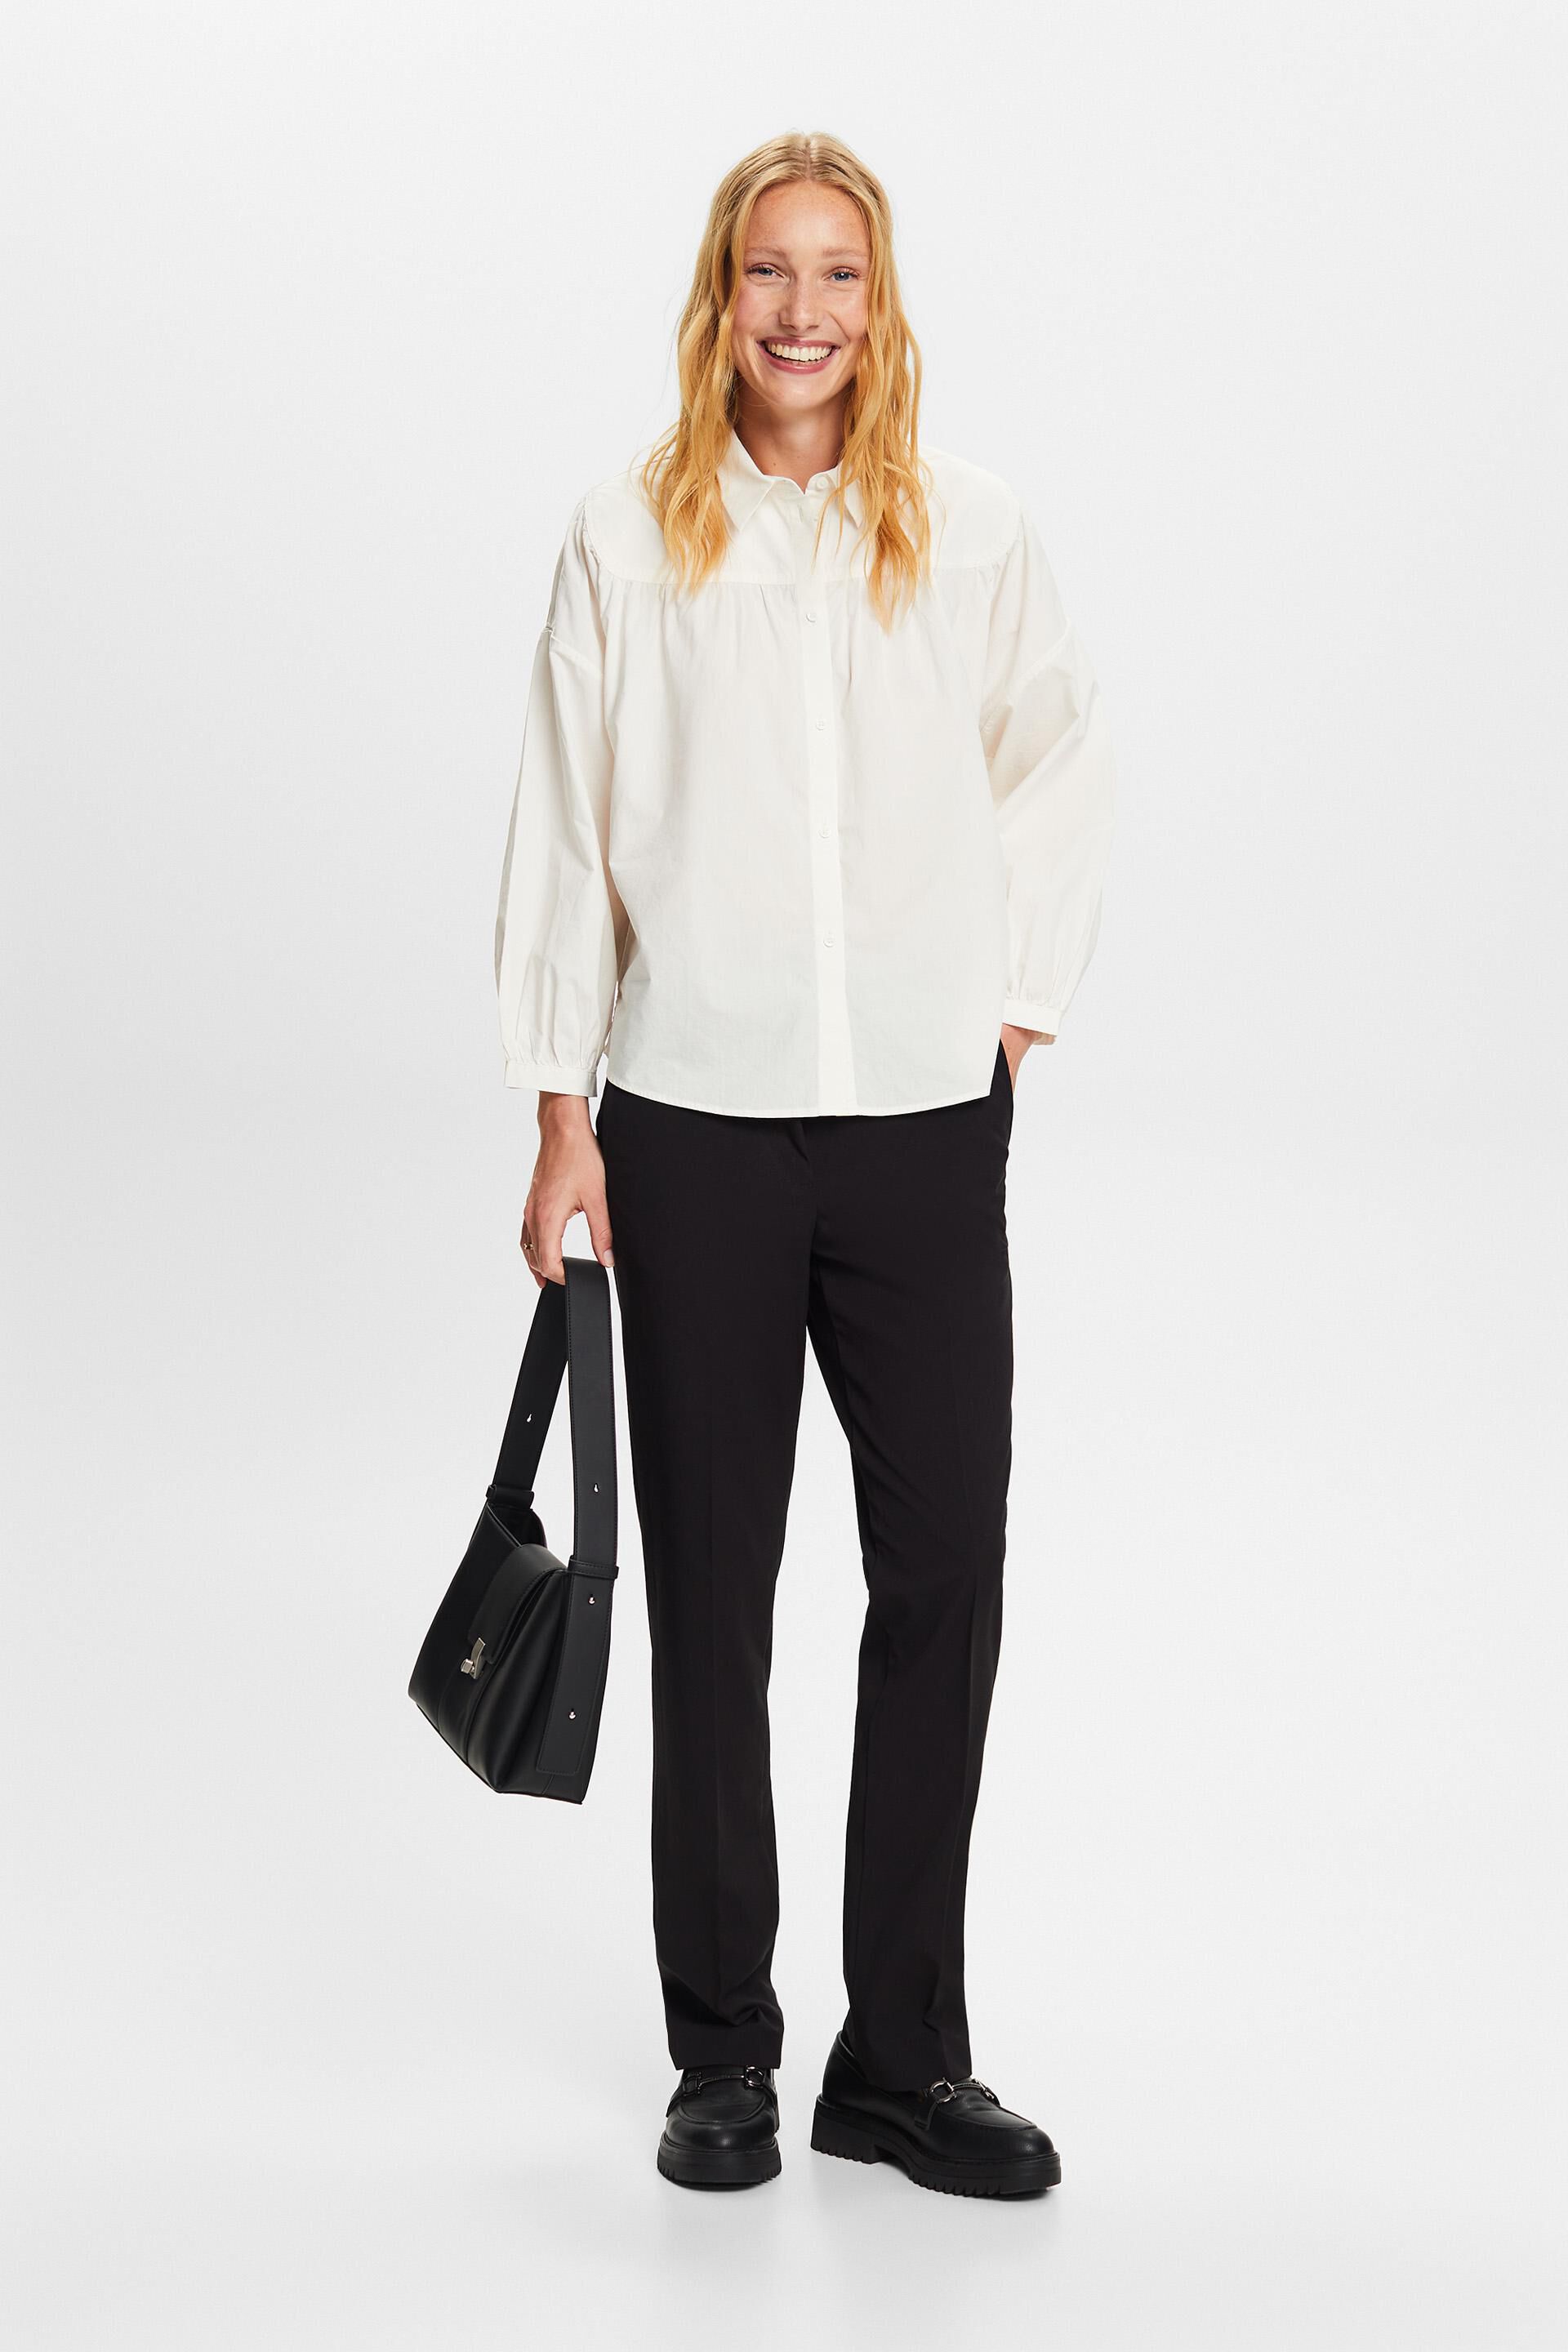 Esprit blouse, cotton 100% Poplin